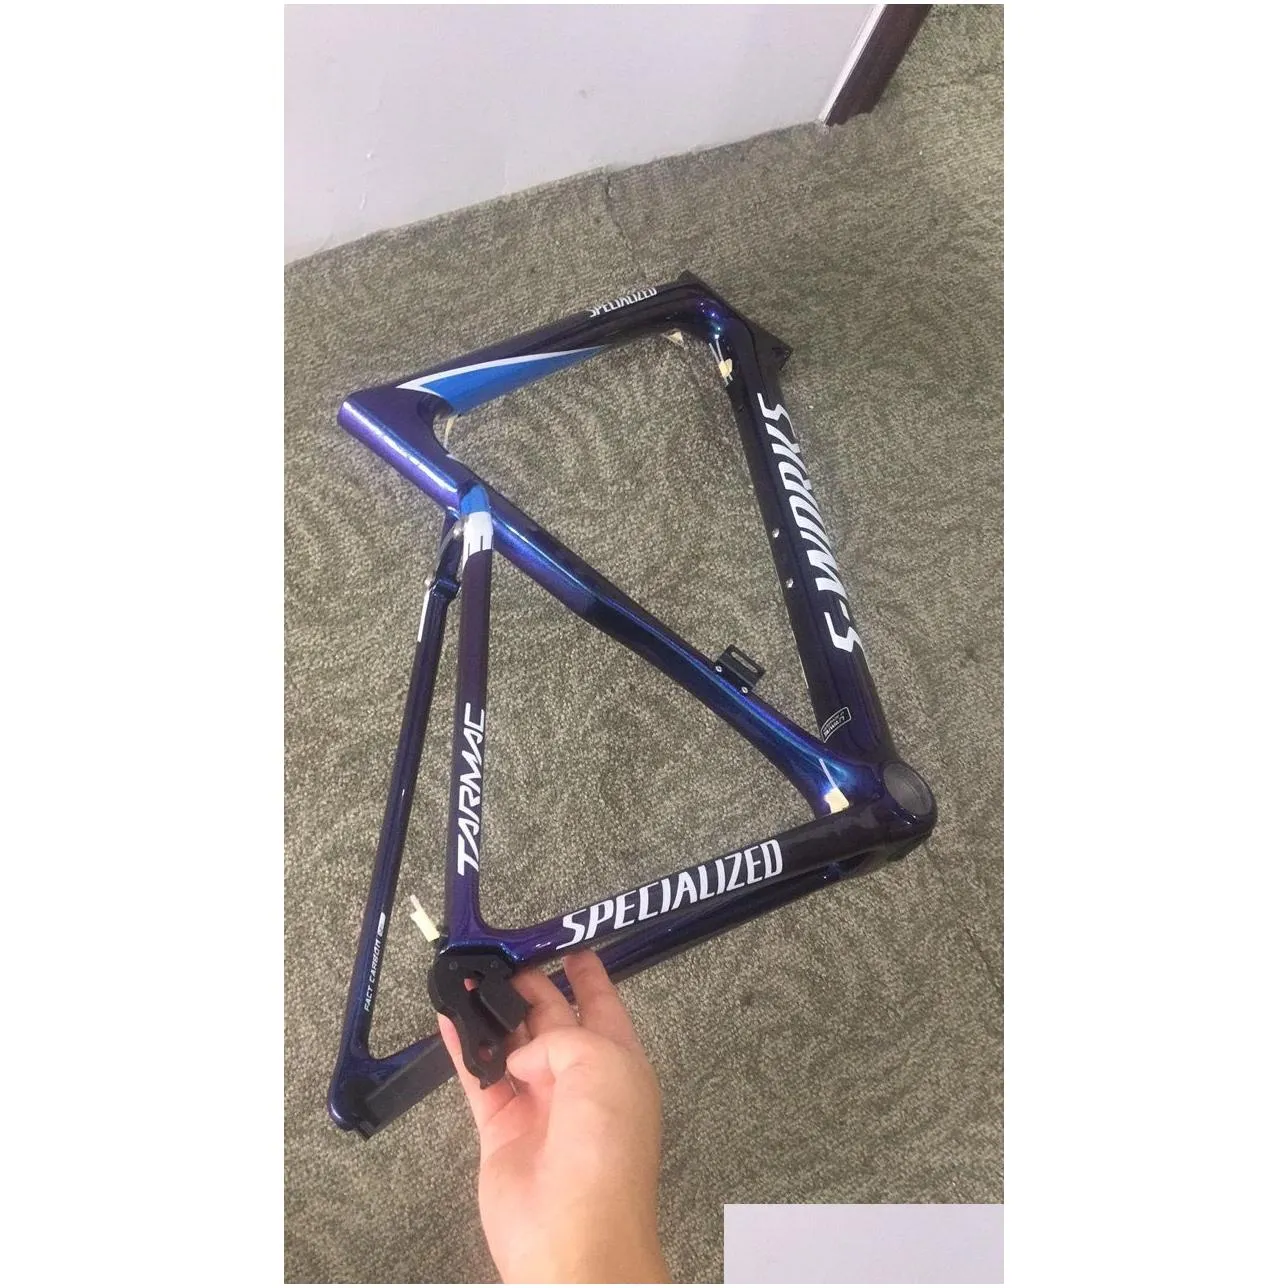 made in china road carbon fiber chameleon bike frames super light racing custon paint carbon fiber bicycle rameset t1000 cycling